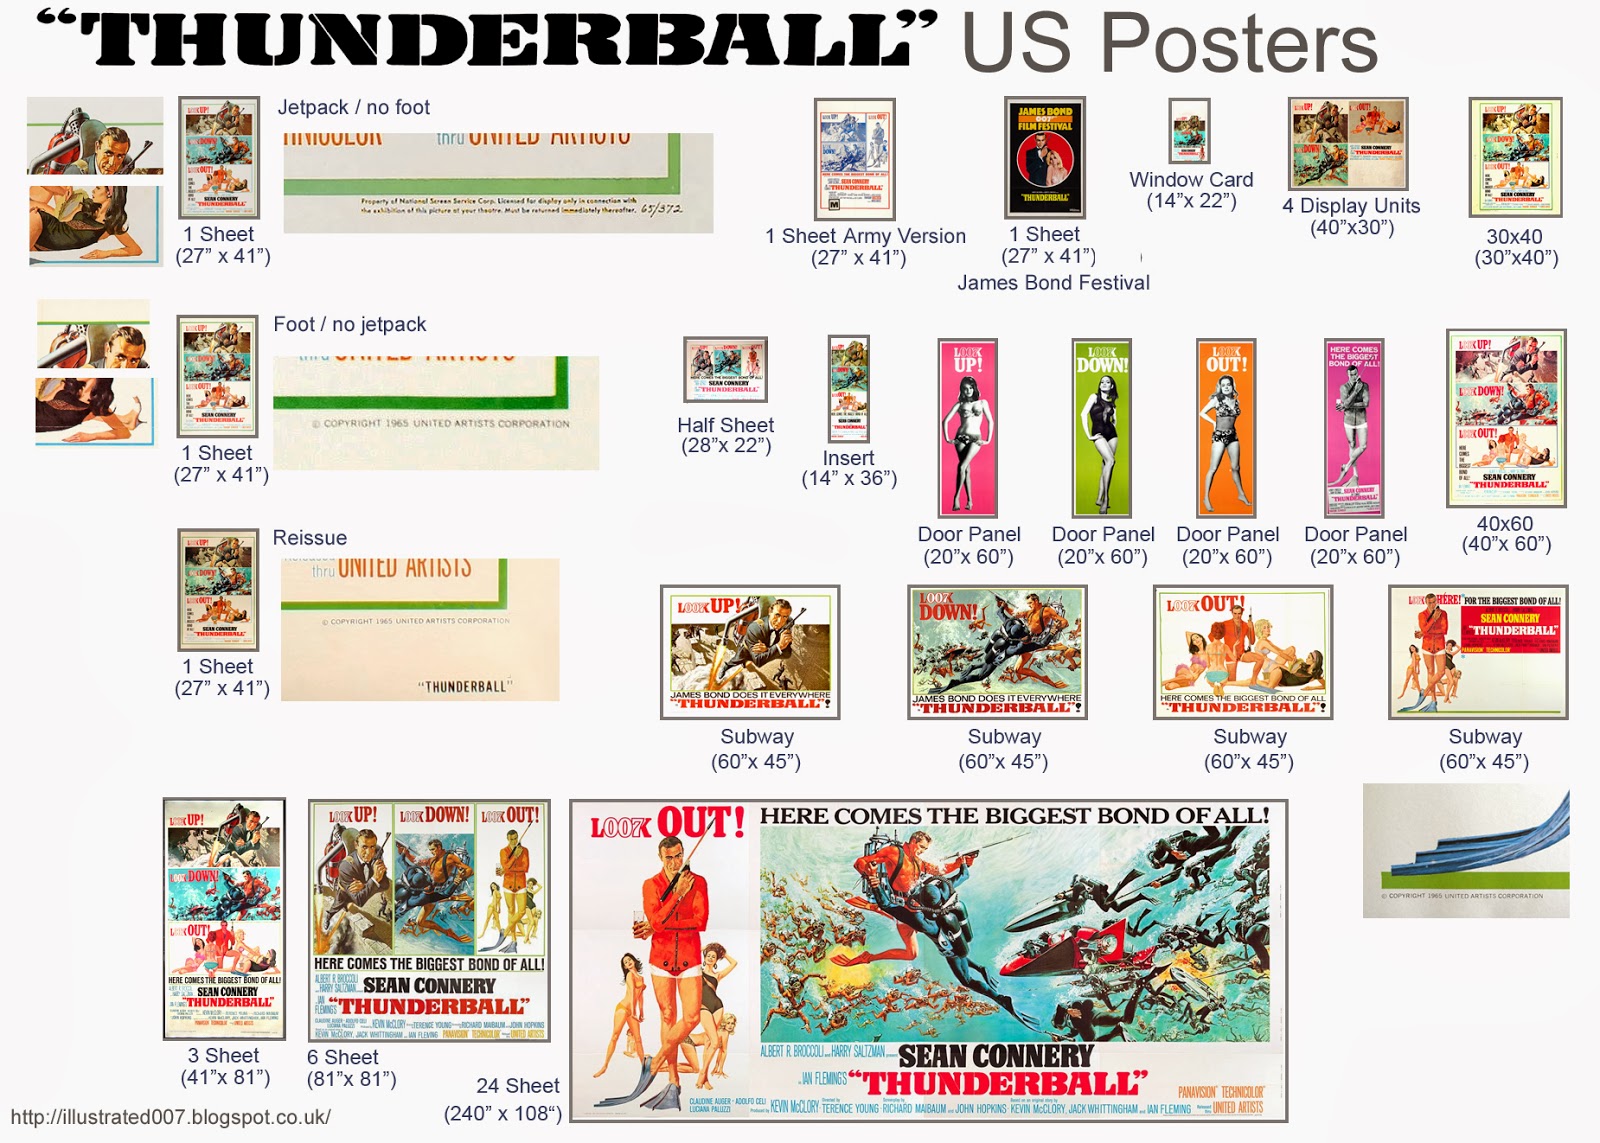 thunderball+us+posters+james+bond+007+insert+window+card+1+3+6+sheet+door+panel.jpg